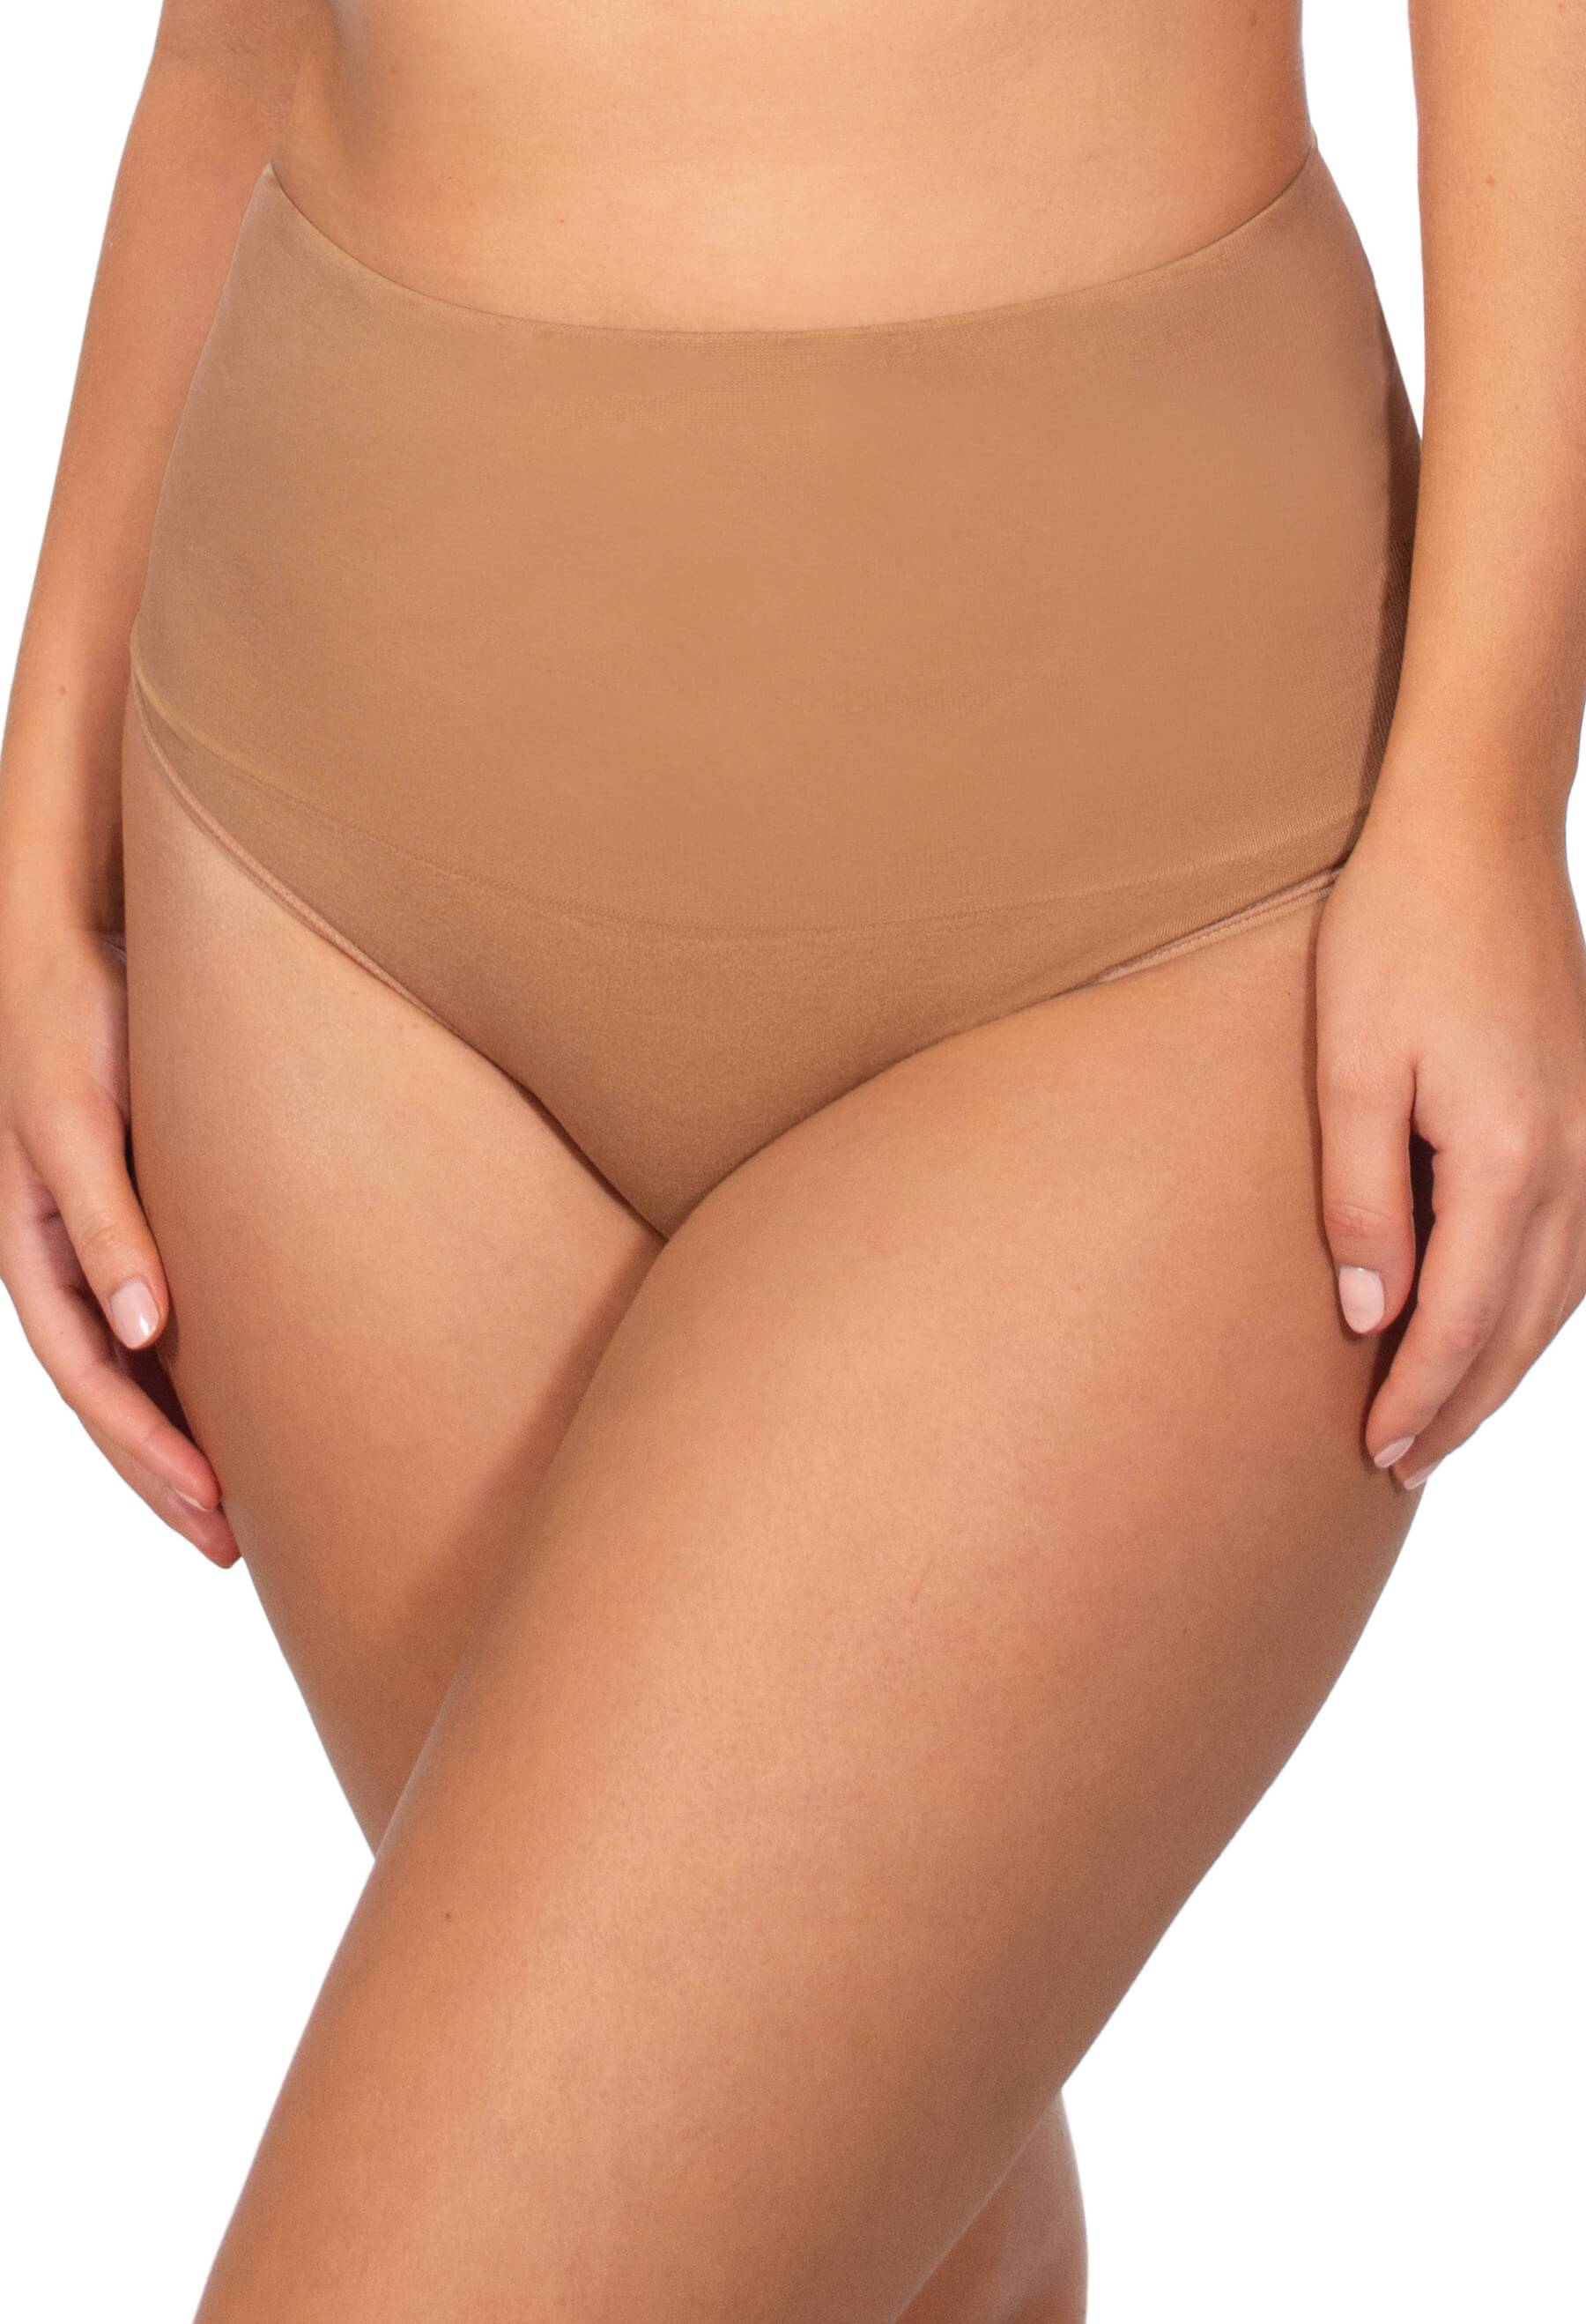 Bingrong Women's High Waist Shaping Panties Slimming Flat Stomach